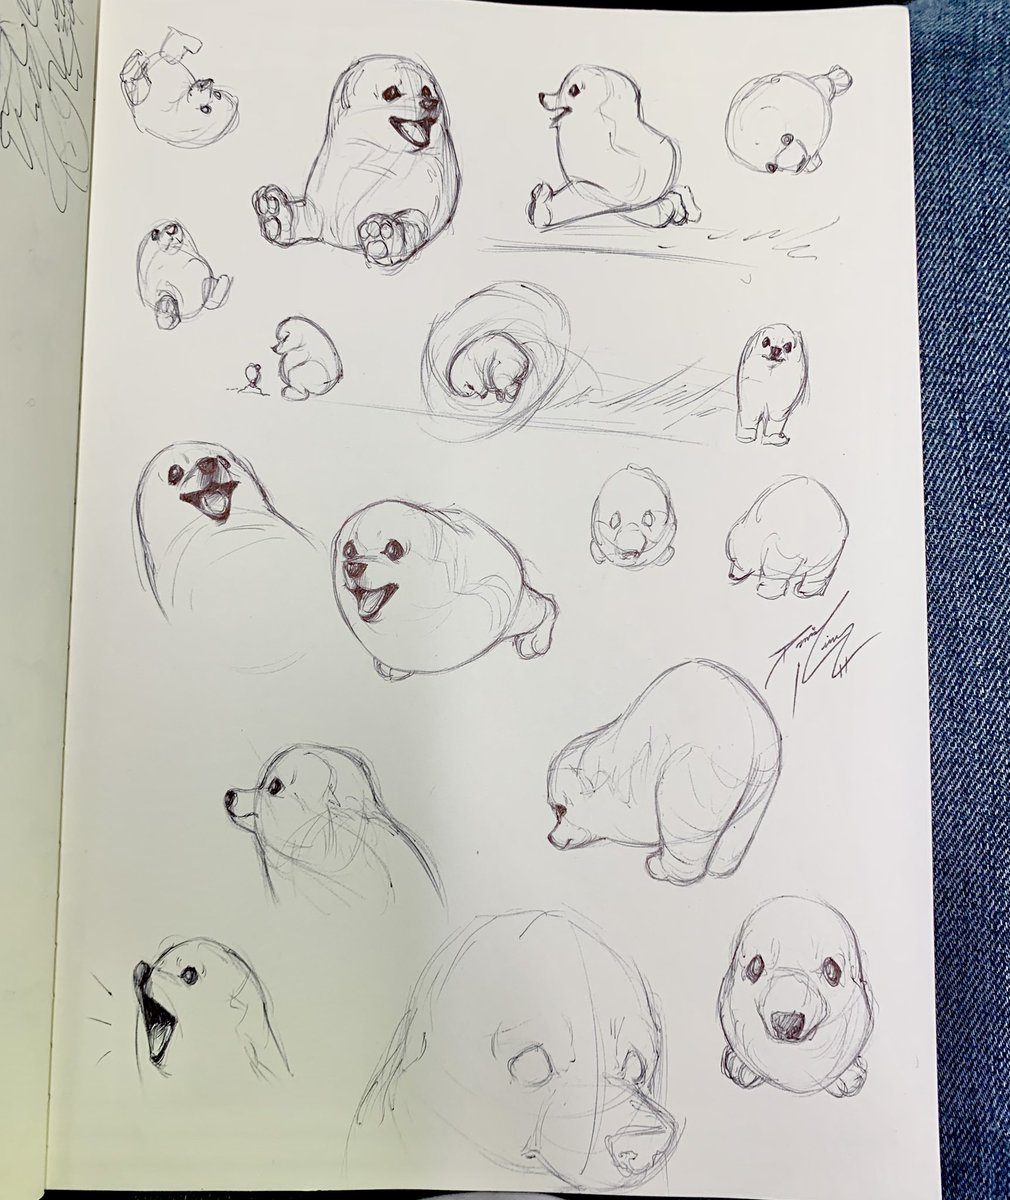 Eggdog sketches (Study’s)
-
#drawing #sketch #art #artwork #artworks #ballpointpen #ballpointpenart #drawingstudy #artstudy #eggdog #ArtistOnTwitter #artistsupport